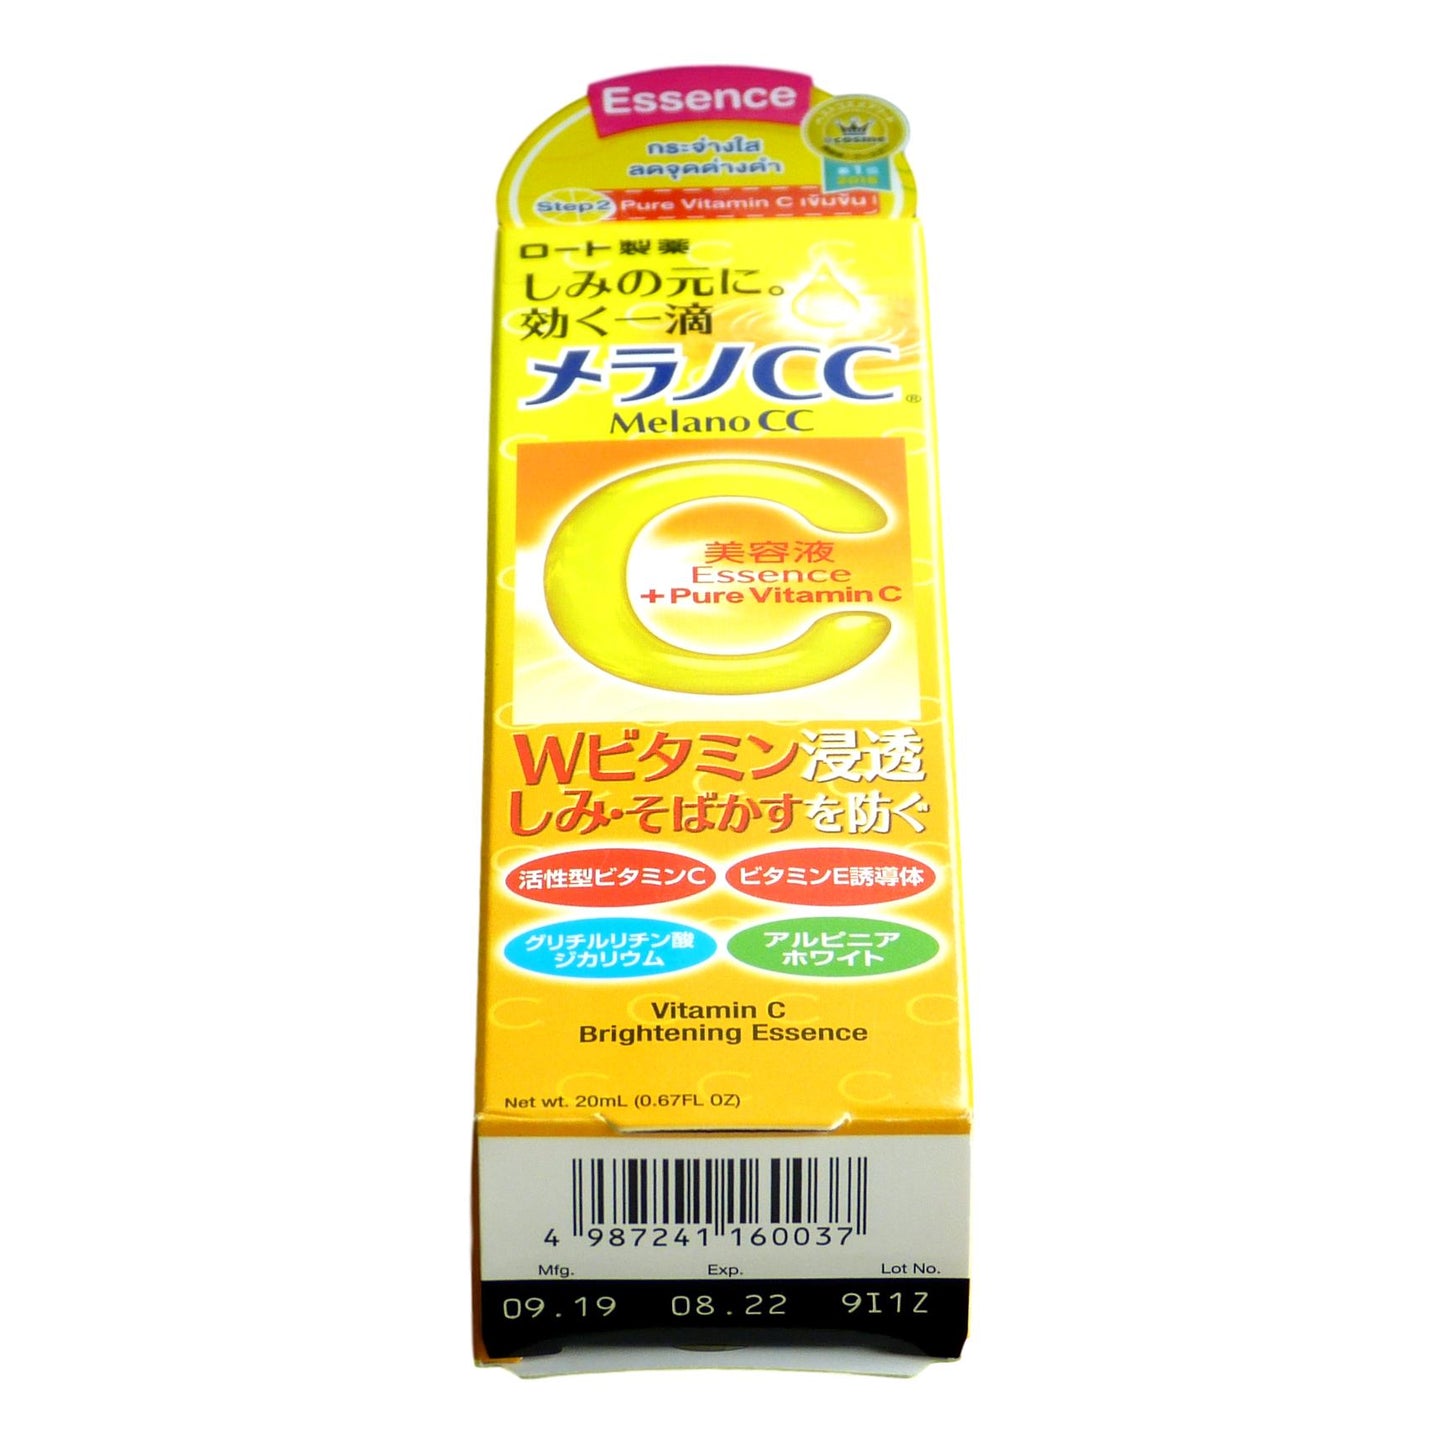 Rohto Melano CC Intensive Anti-spot Essence 20ml (Thailand Version) - Asian Beauty Supply